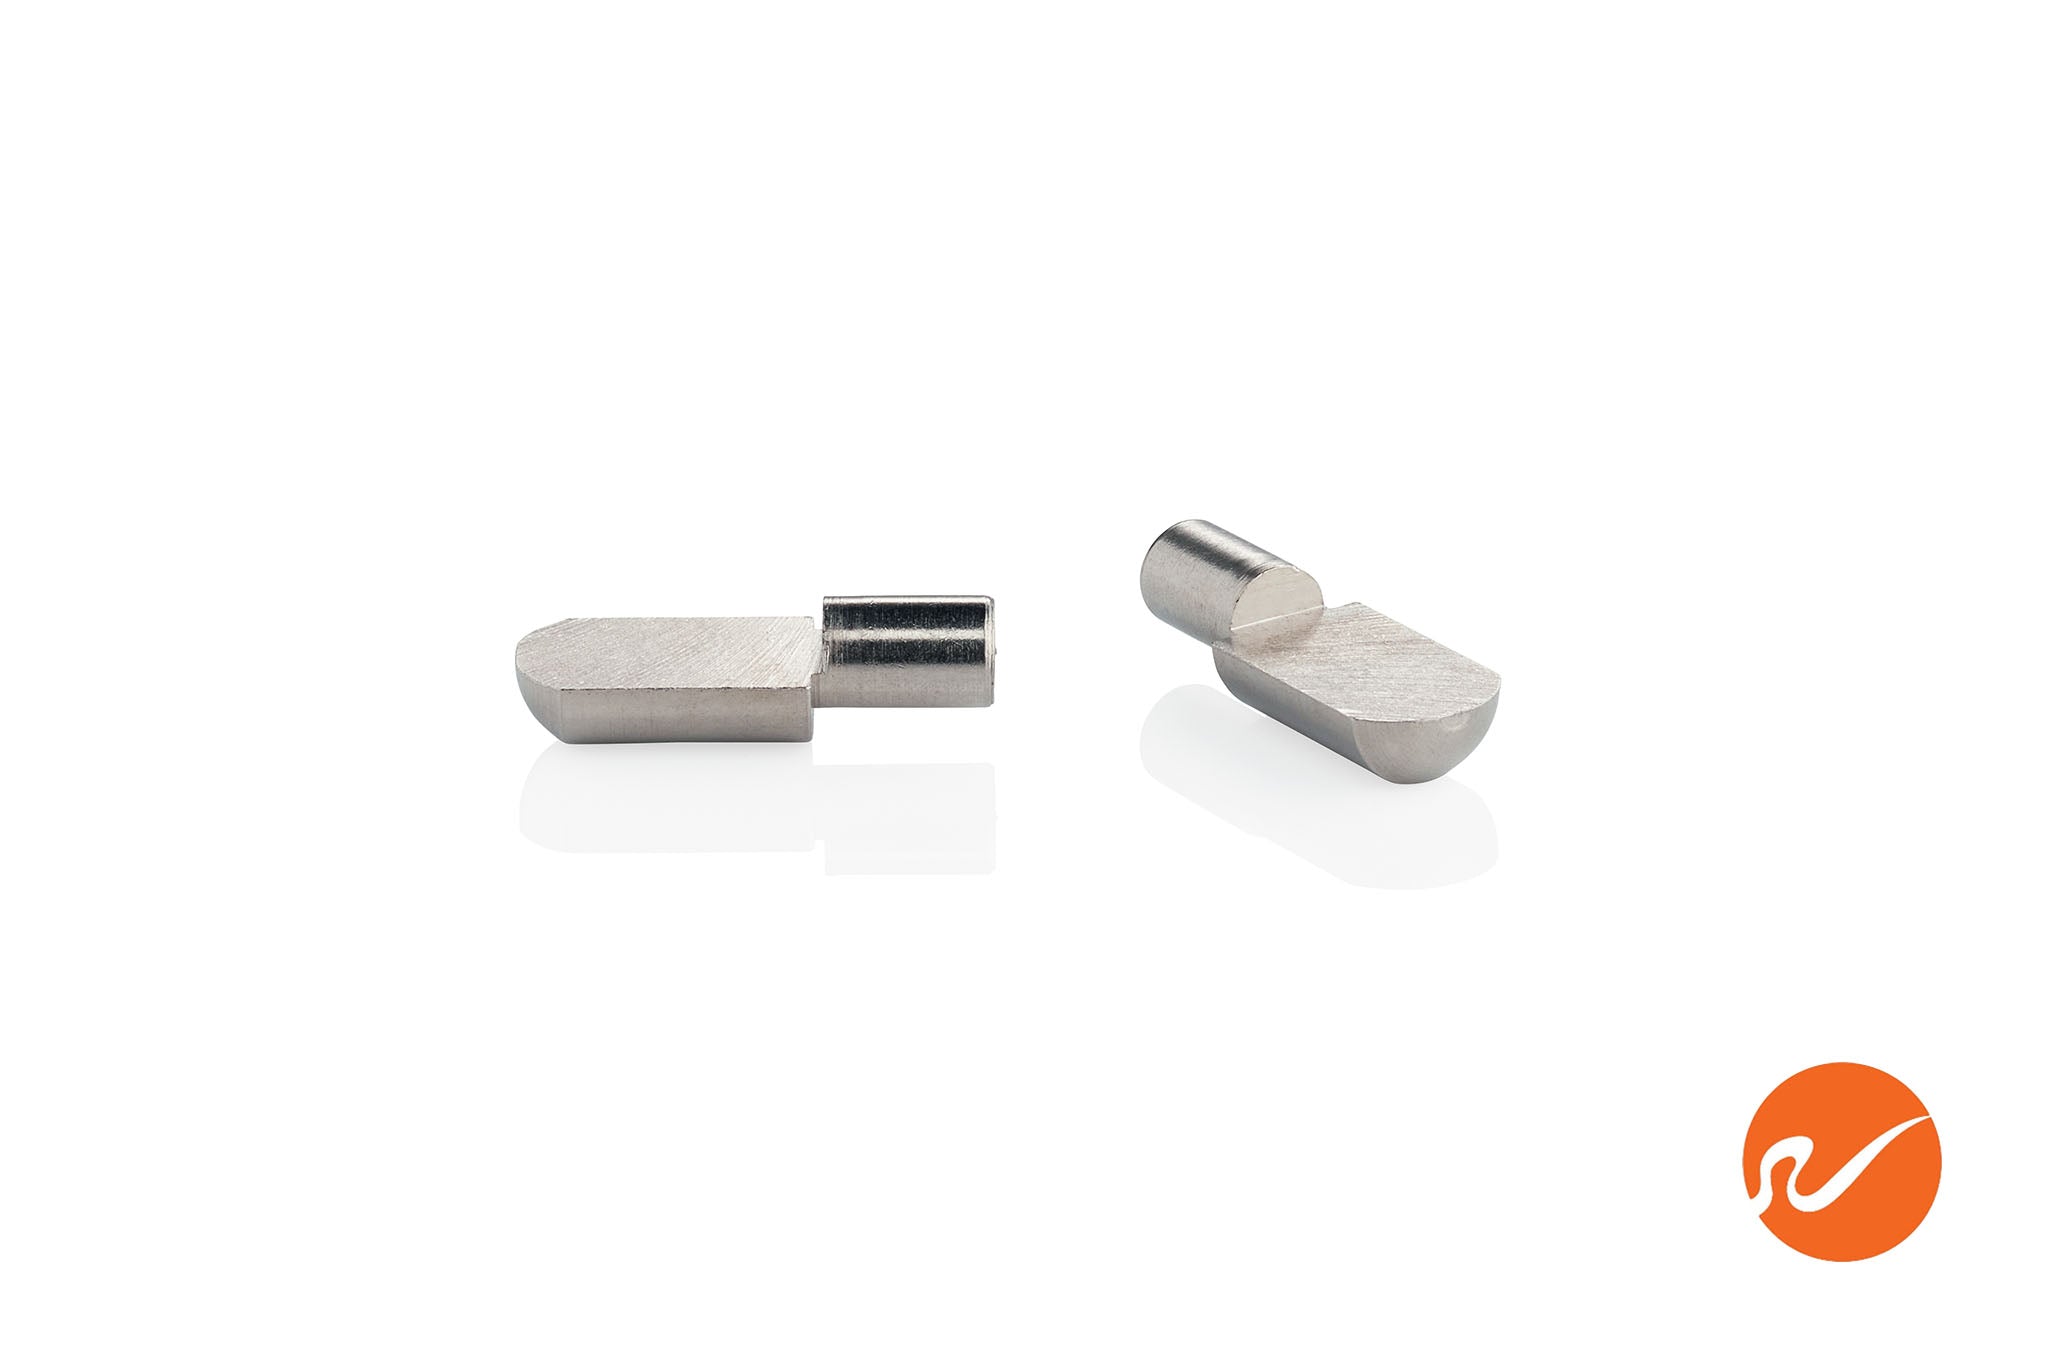 5mm Stainless Steel Shelf Pins - WidgetCo